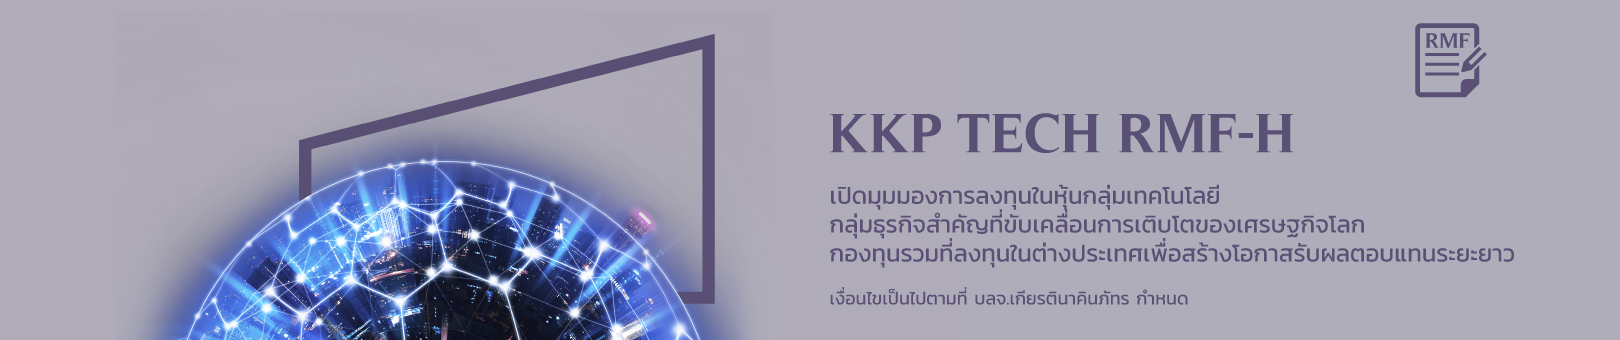 KKP-TECH-RMF-H-1620